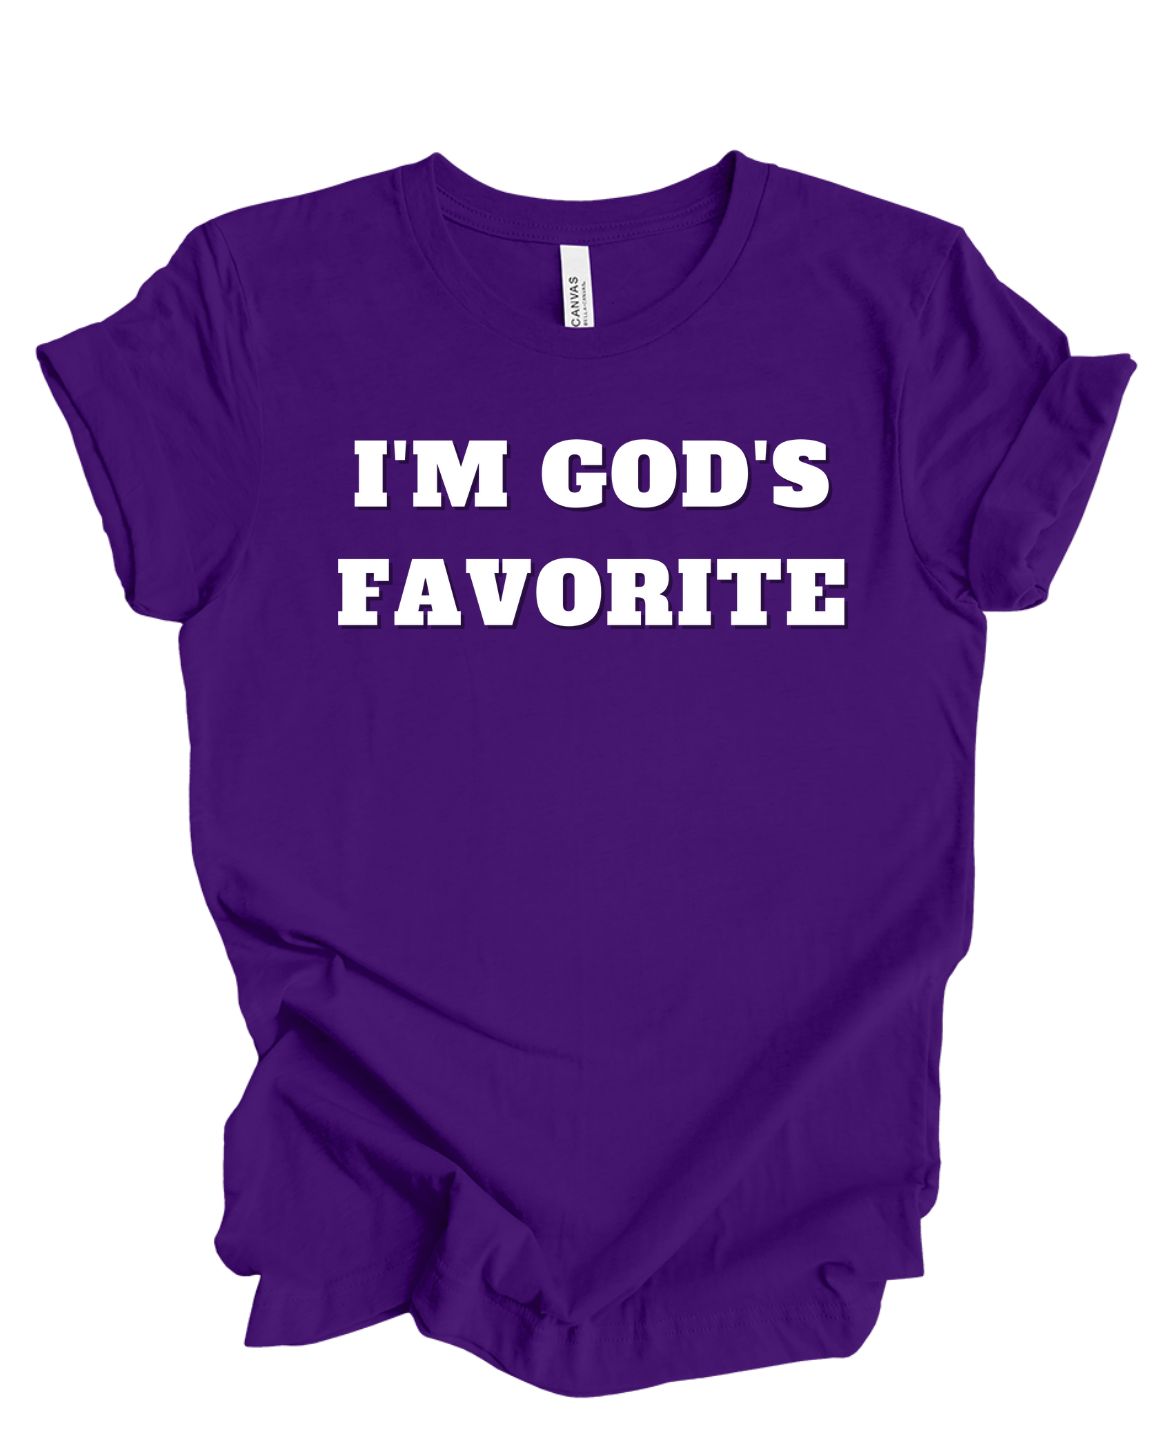 I'm God's Favorite T-shirt